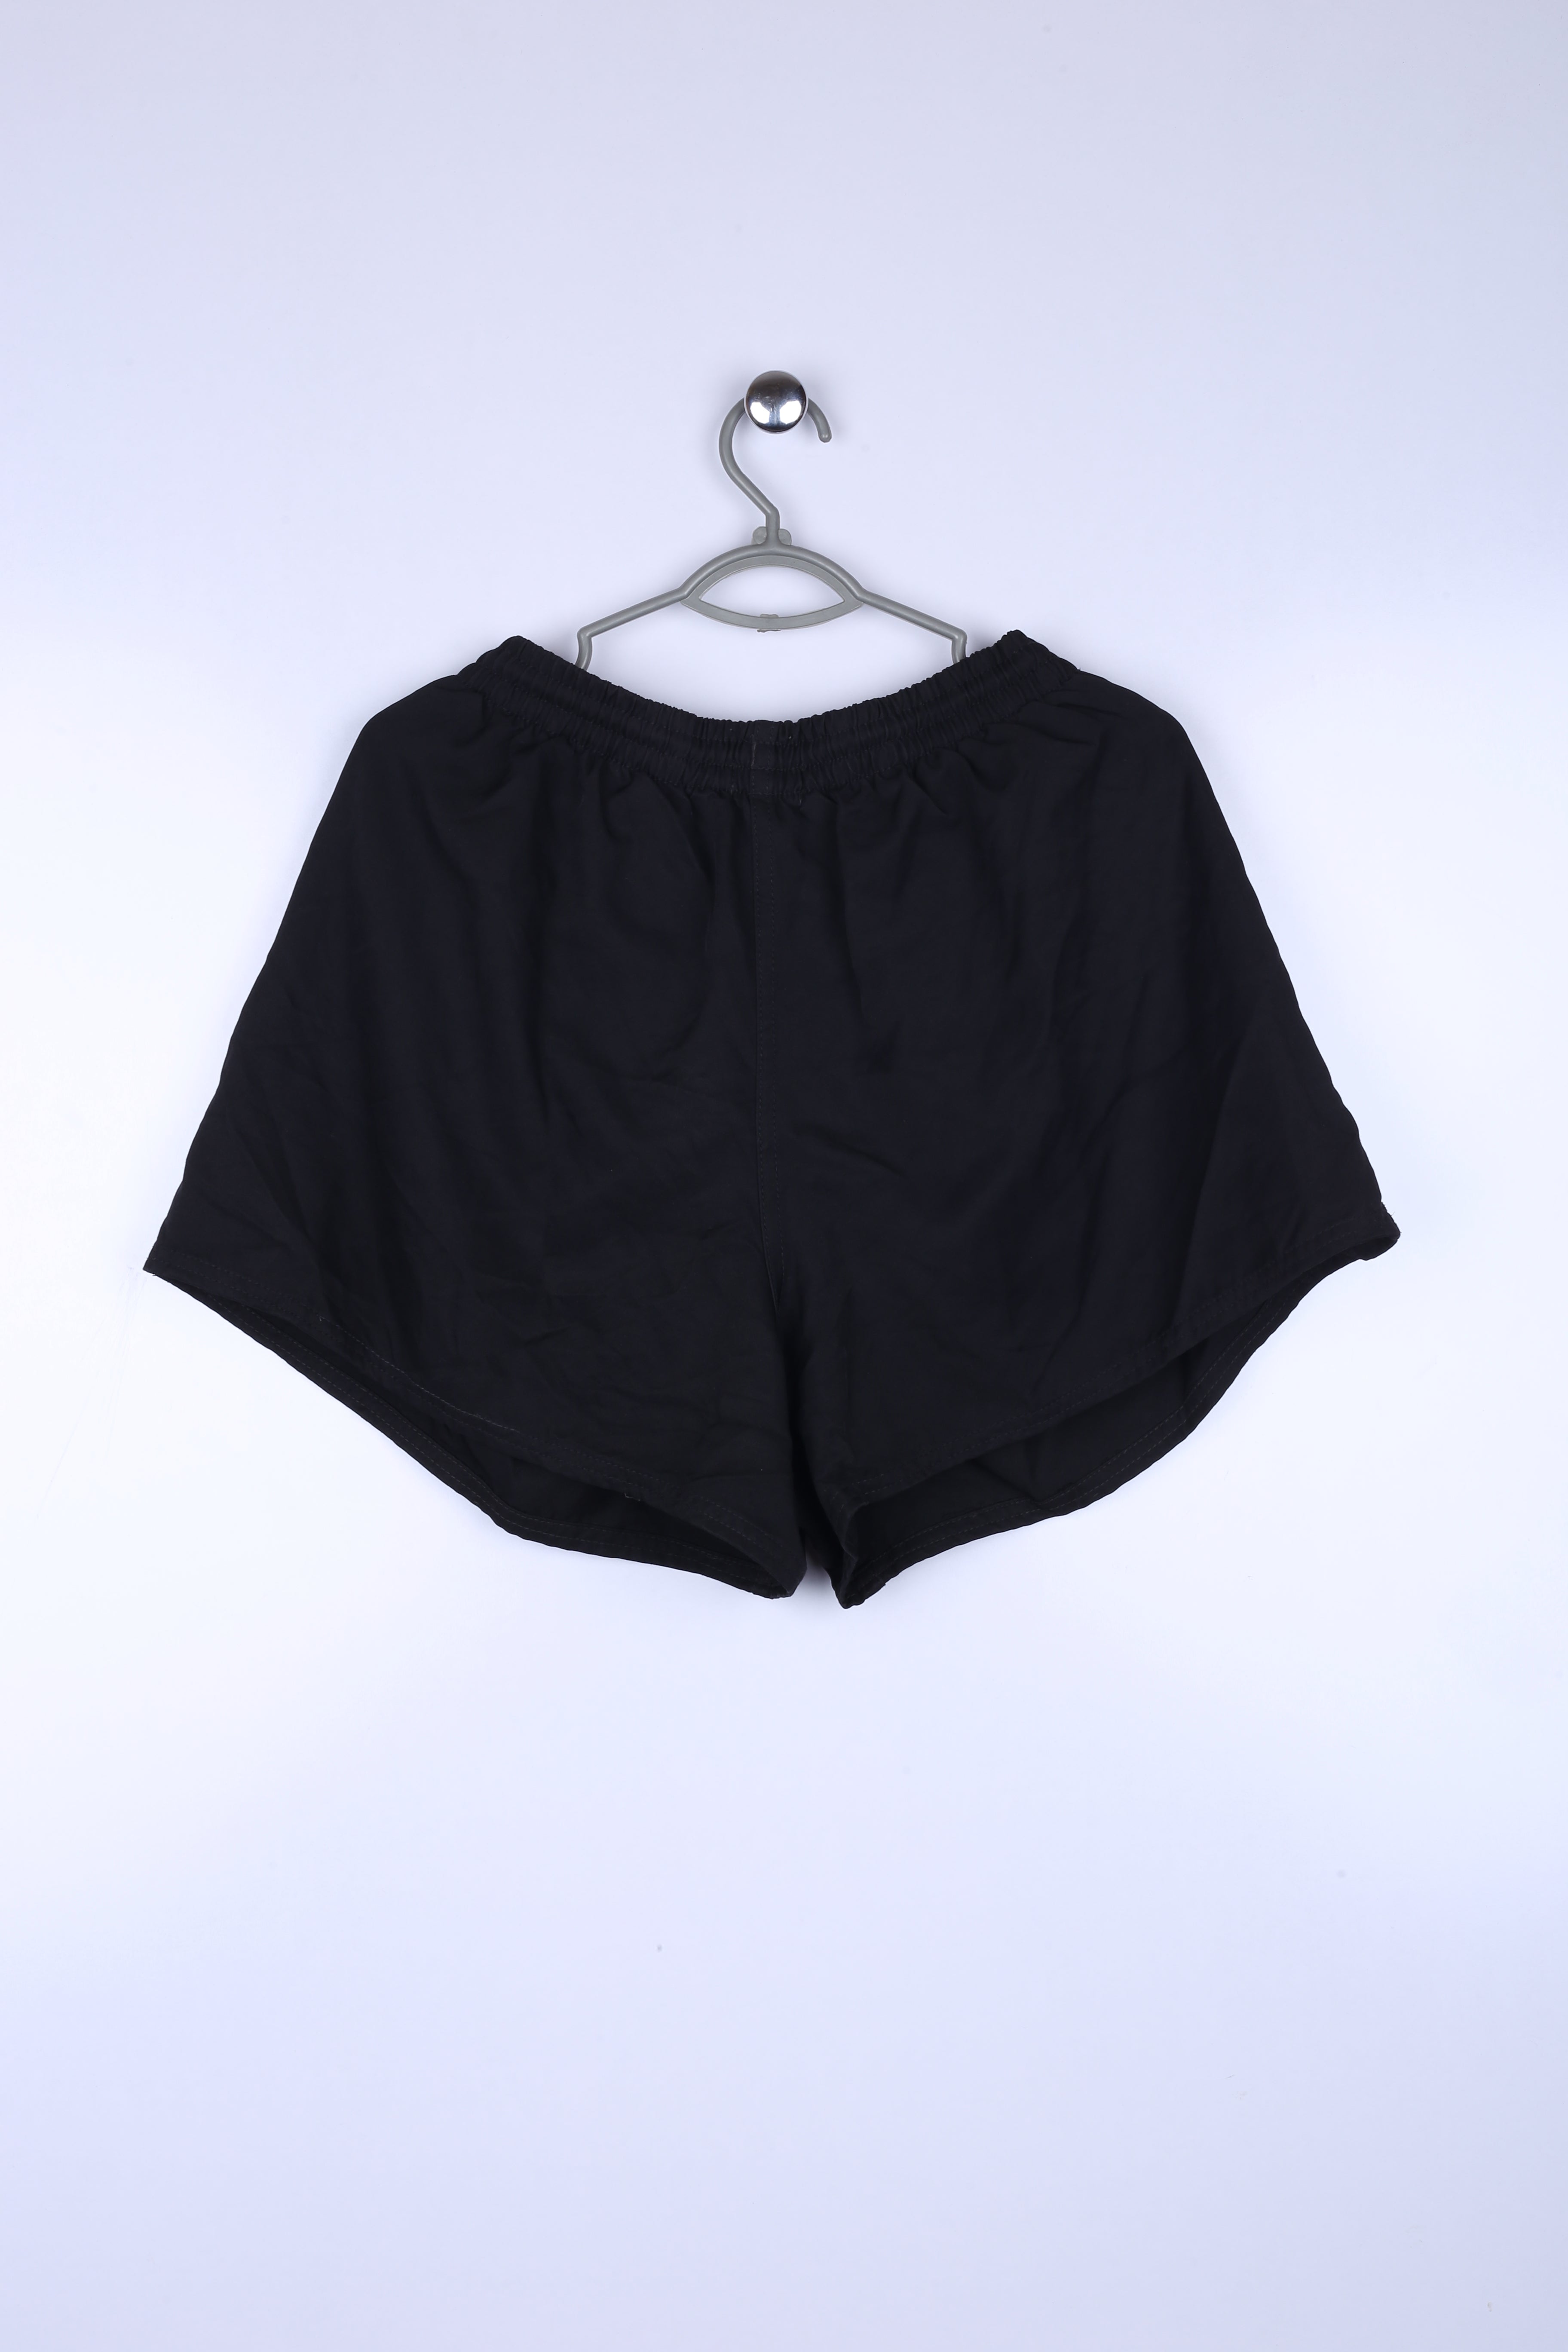 Vintage Kappa Shorts Black